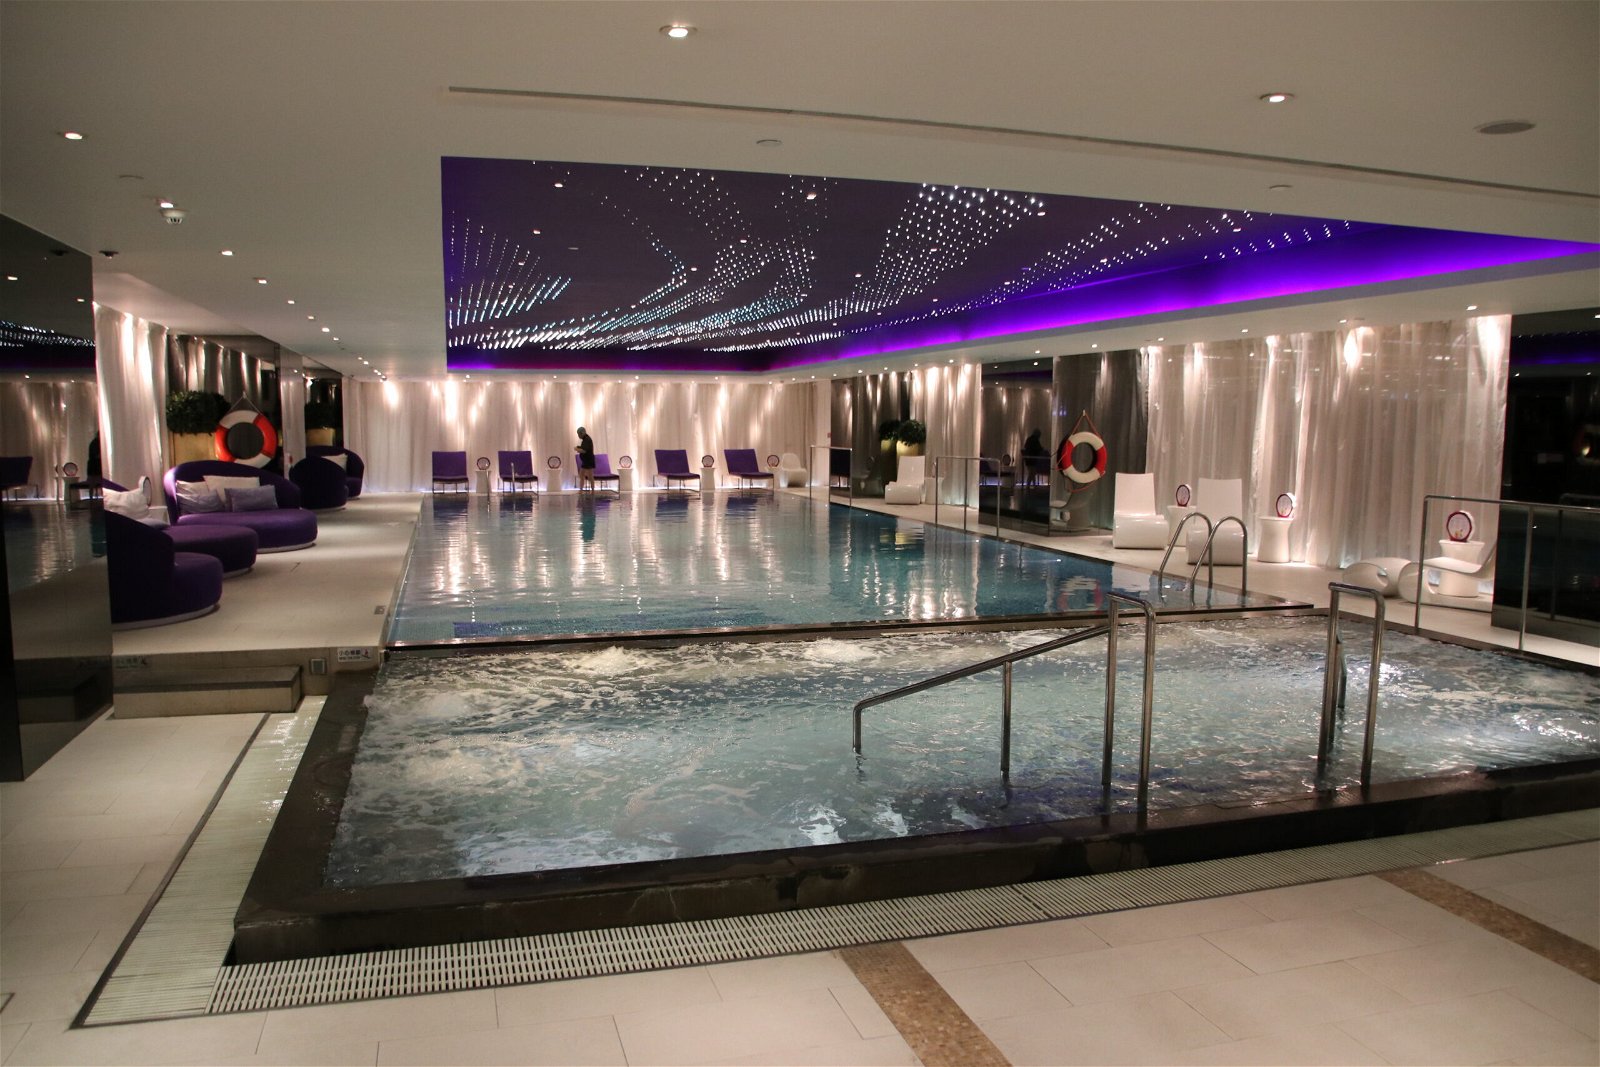 The Mira Hotel Pool.